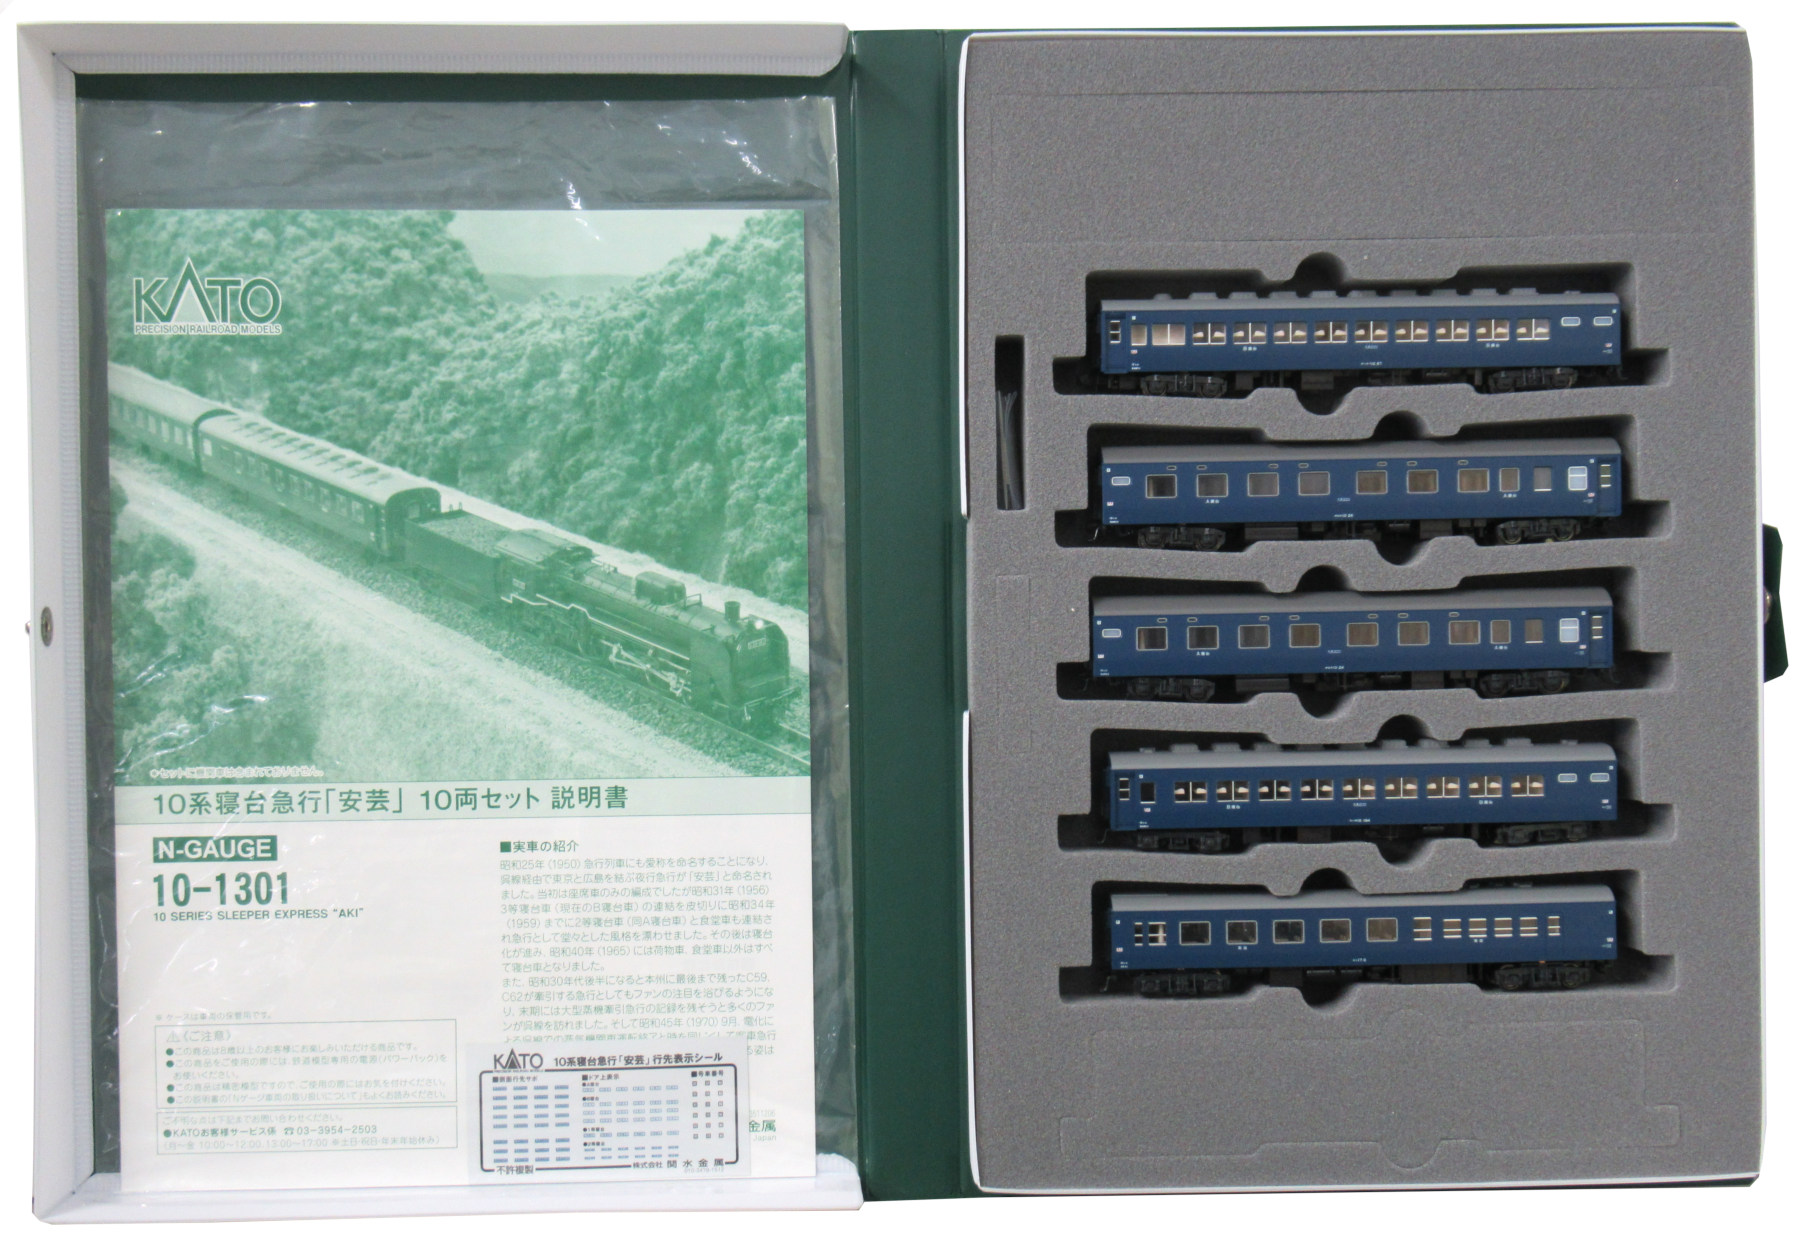 KATO Nゲージ 10系 寝台急行 妙高 基本 6両セット 10-563 鉄道模型 